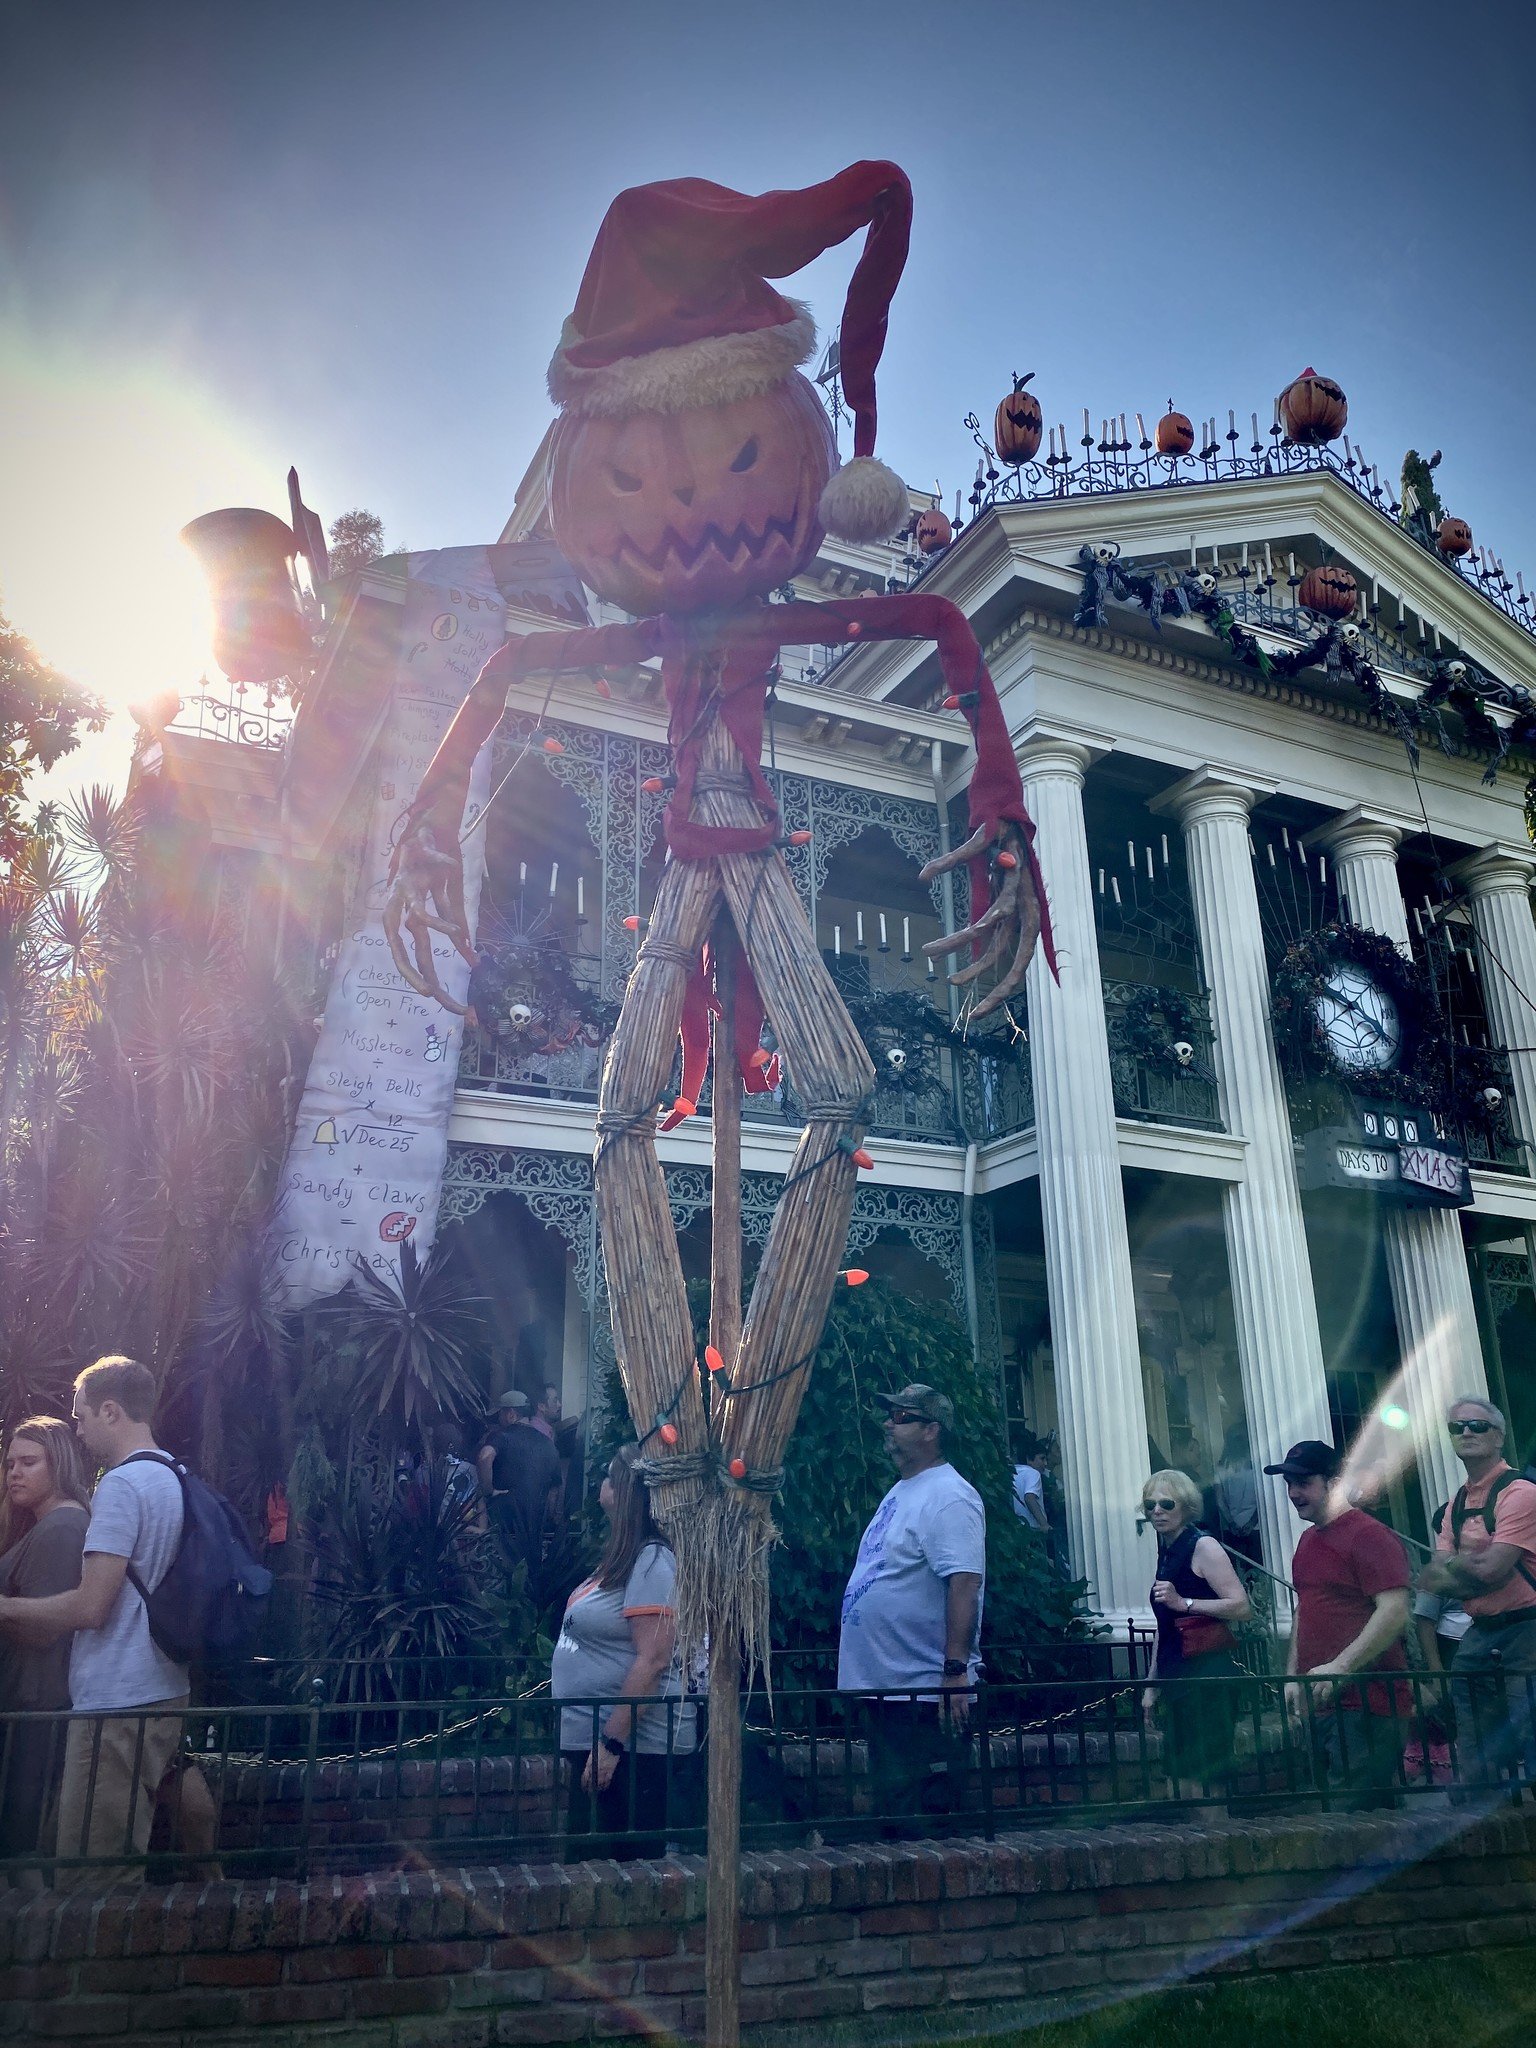 Pumpkin scarecrow at Haunted Mansion Holiday in Disneyland